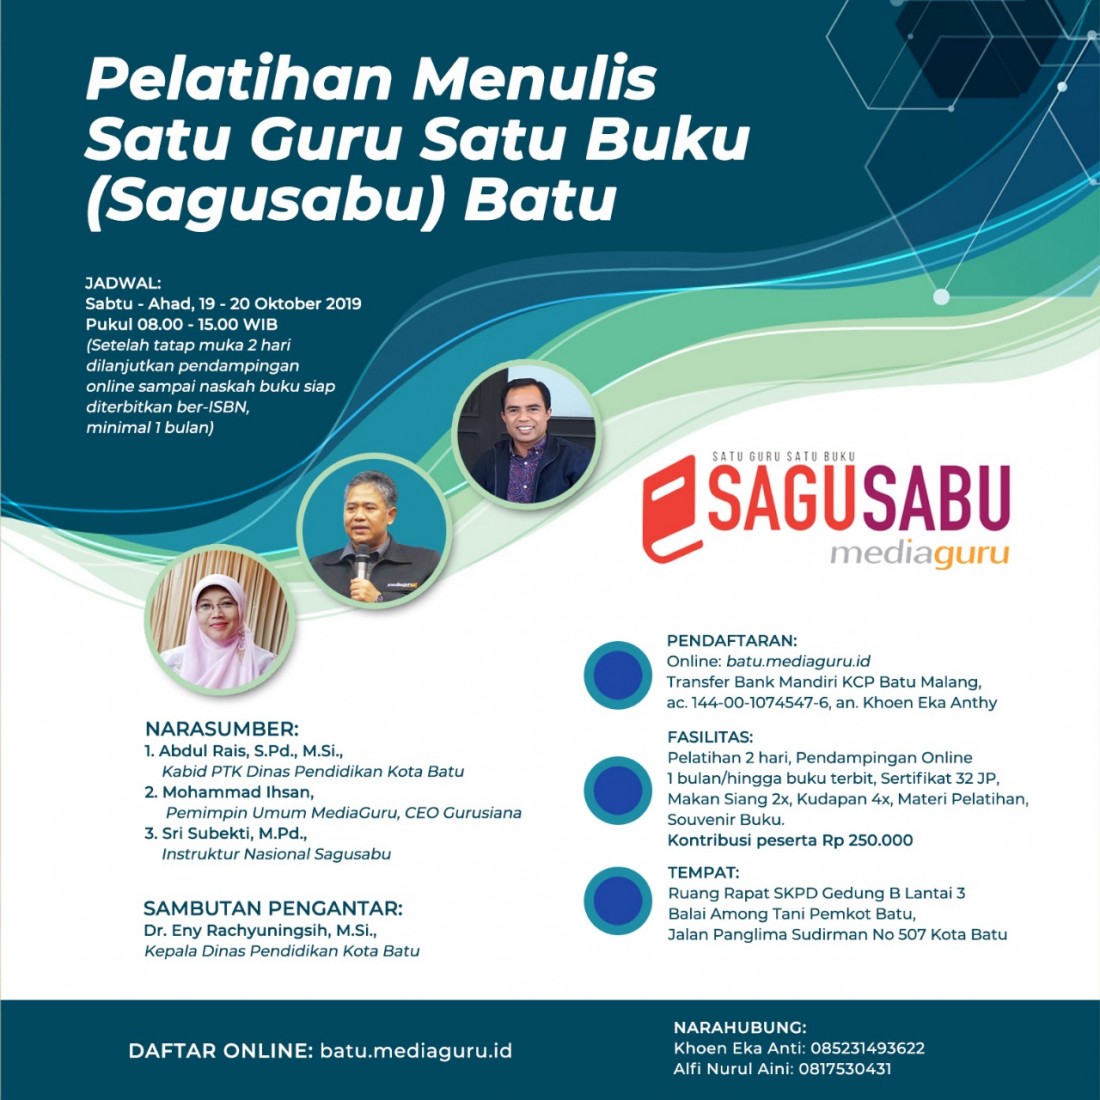 Pelatihan Menulis Sagusabu Batu (19 - 20 Oktober 2019)